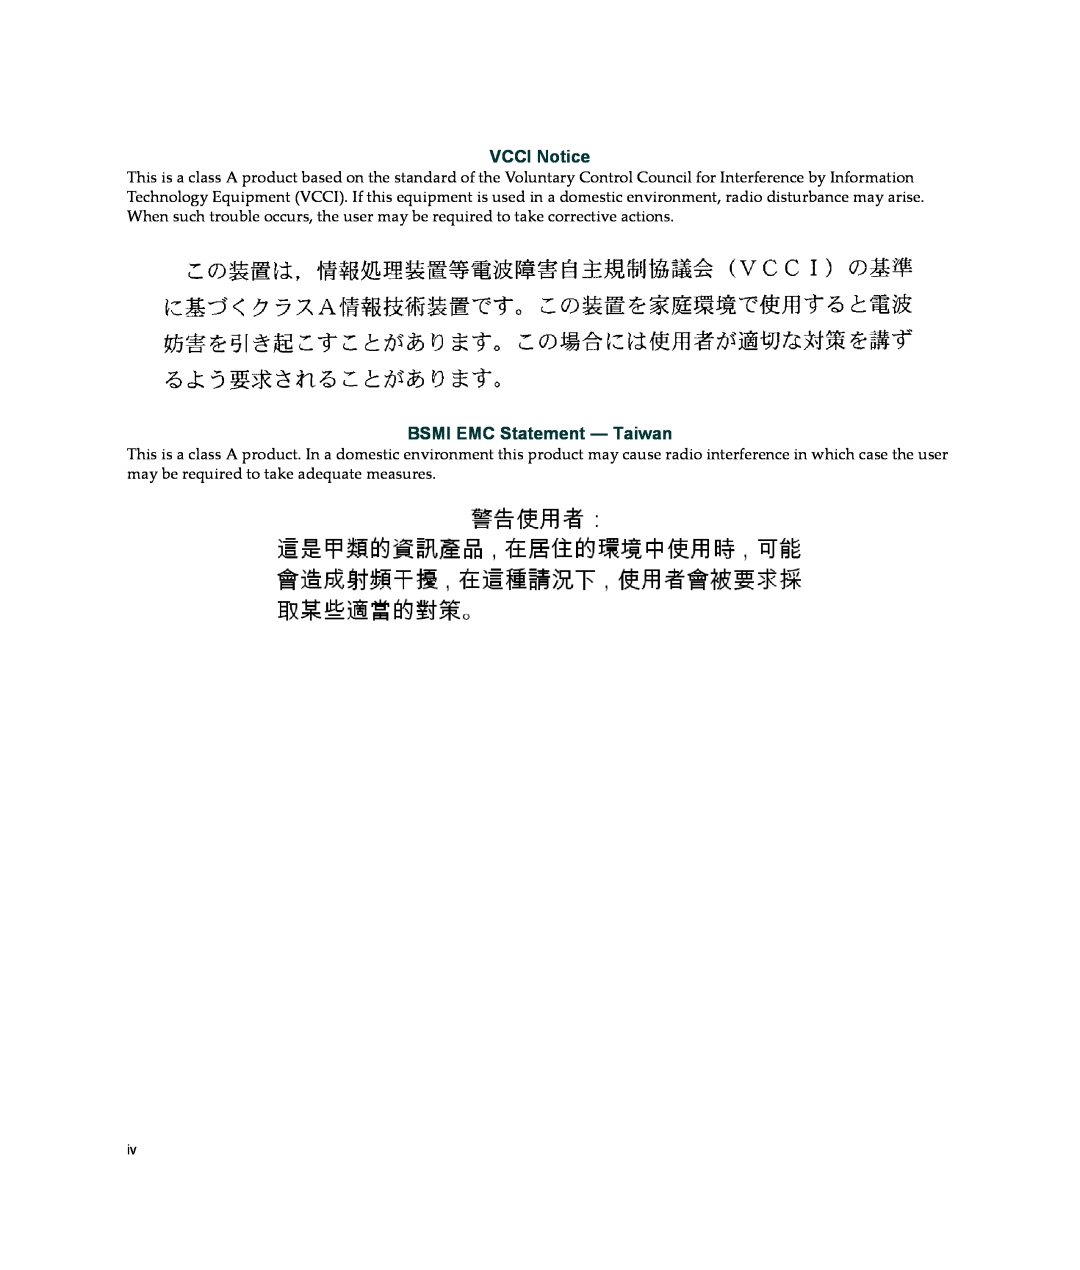 Enterasys Networks BL-6000ENT manual VCCI Notice, BSMI EMC Statement - Taiwan 